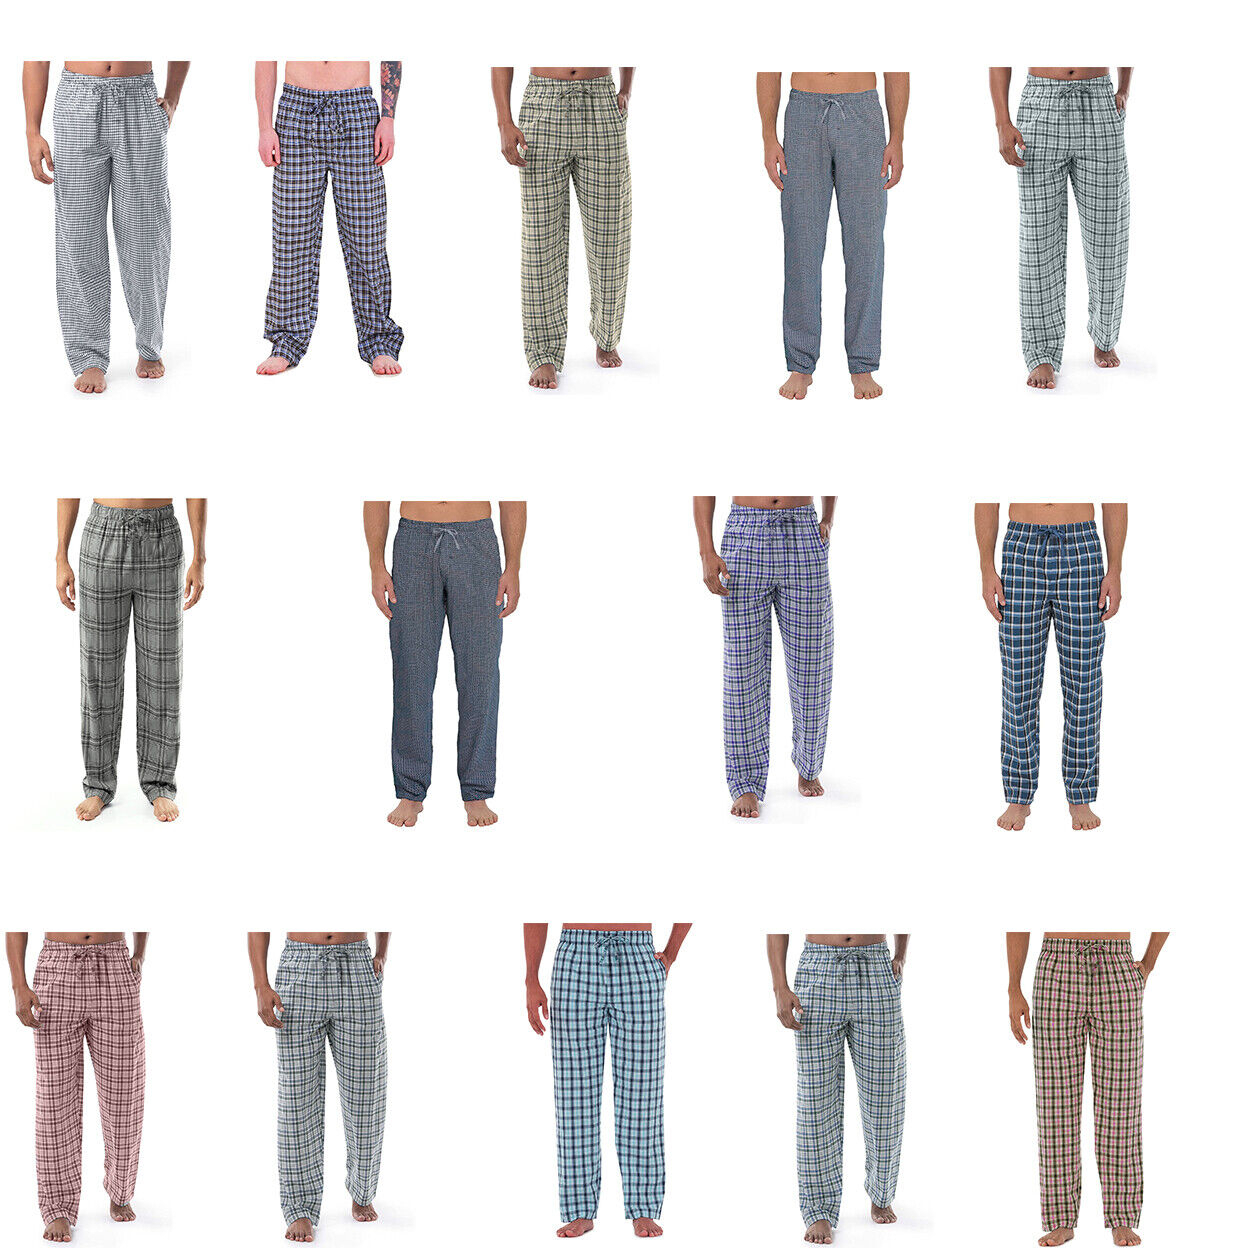 Men's Ultra-Soft Plaid Cotton Jersey Knit Comfy Sleep Lounge Pajama Pants - Red, X-large